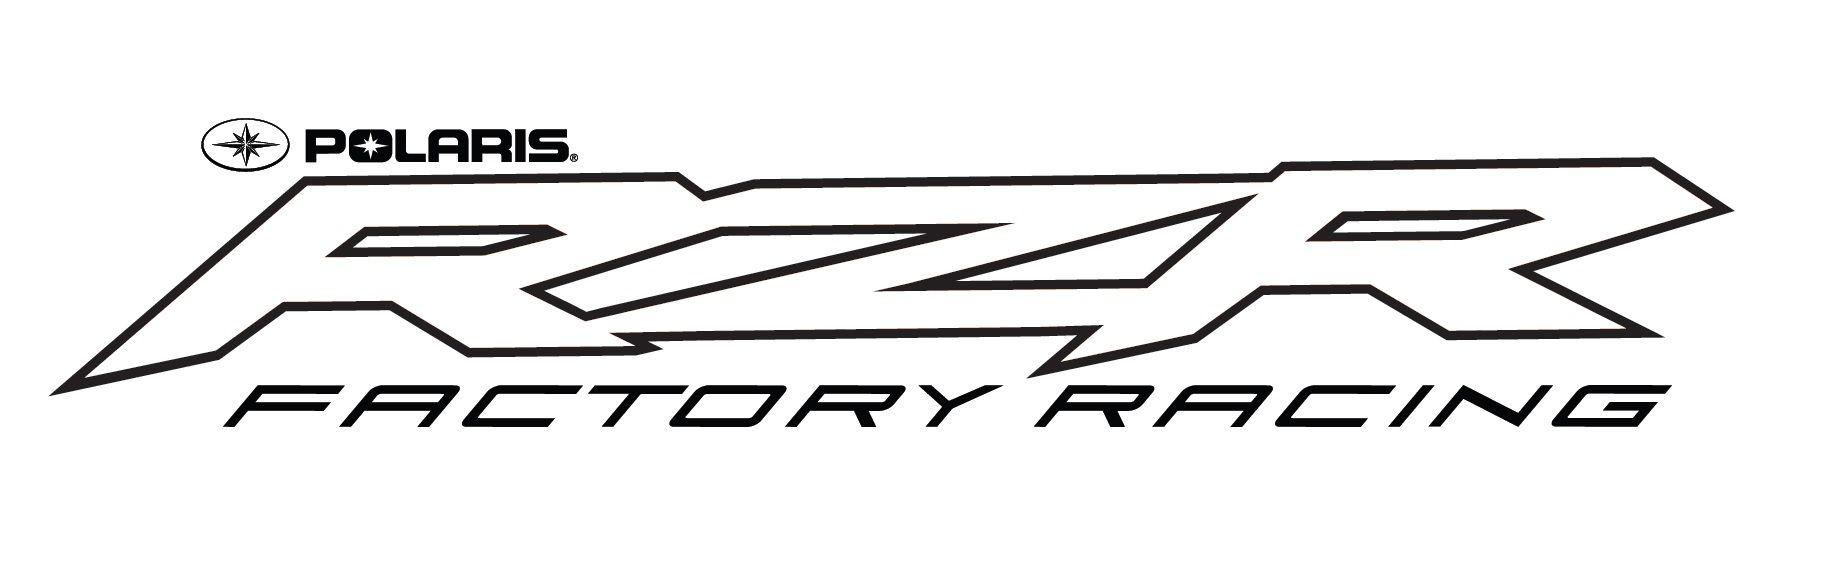 Polaris RZR Logo - Polaris Announces 2017 Off-Road Race Team, RZR Racer Discount ...